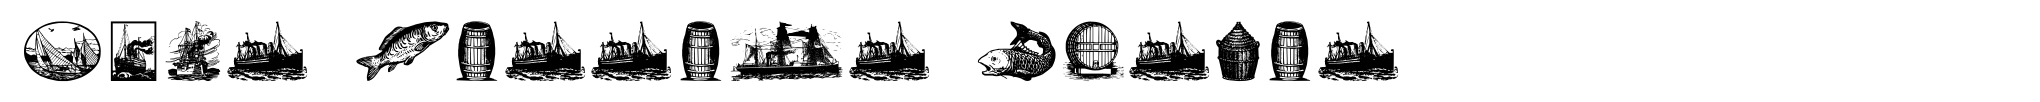 Gans Vessels Fishes image